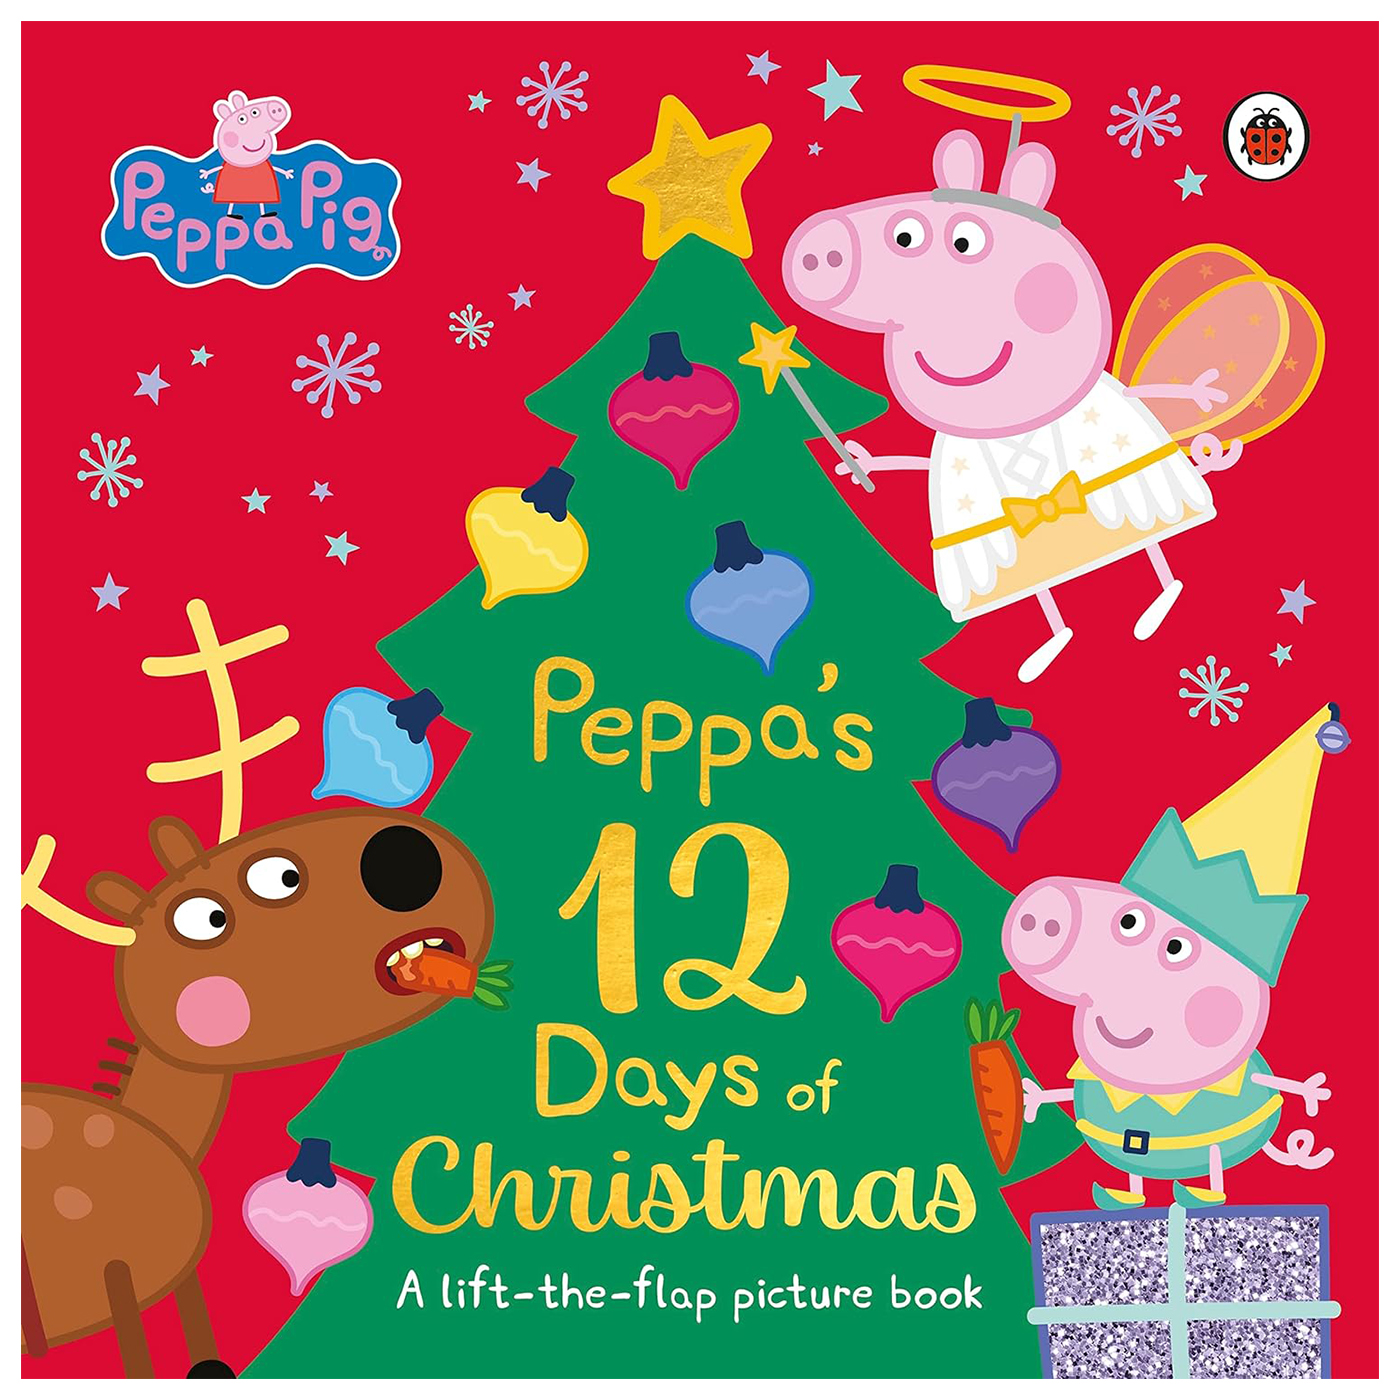  Peppa's 12 Days of Christmas